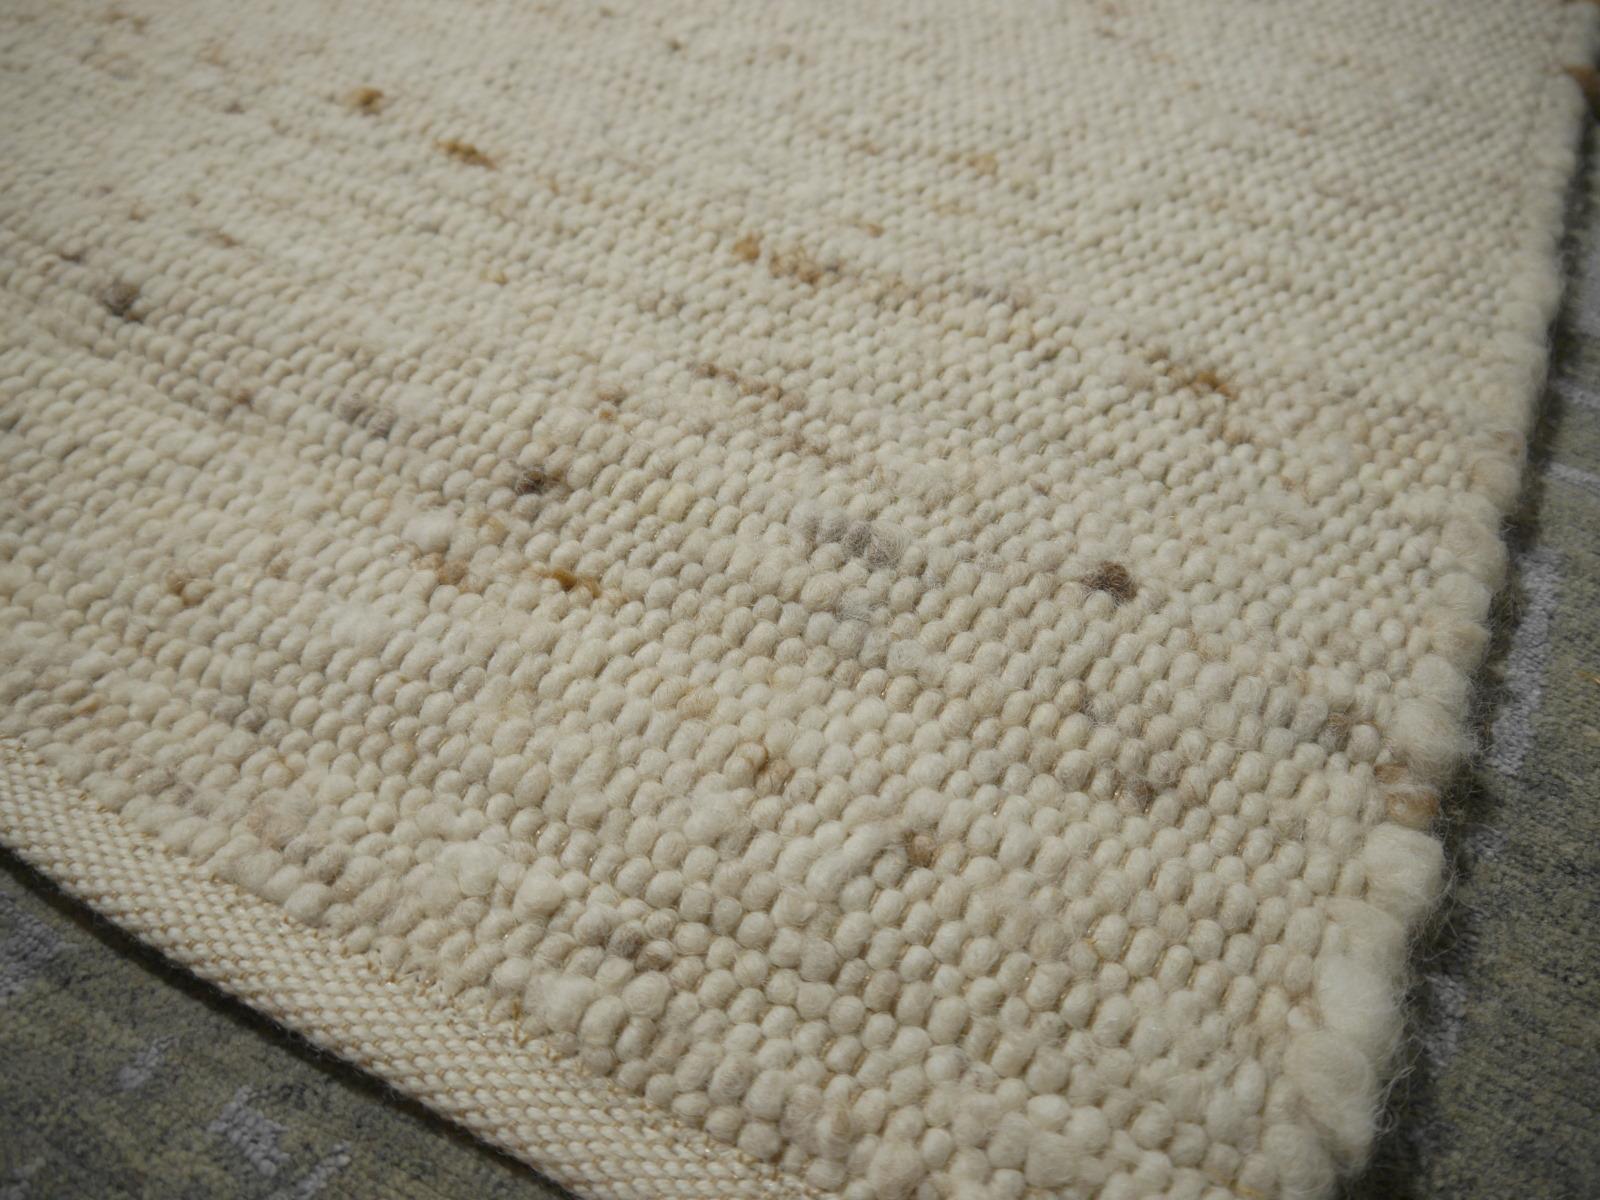 Rustic Beige Kilim Rug Wool Flat Hand-Woven European Carpet by Djoharian Design For Sale 3